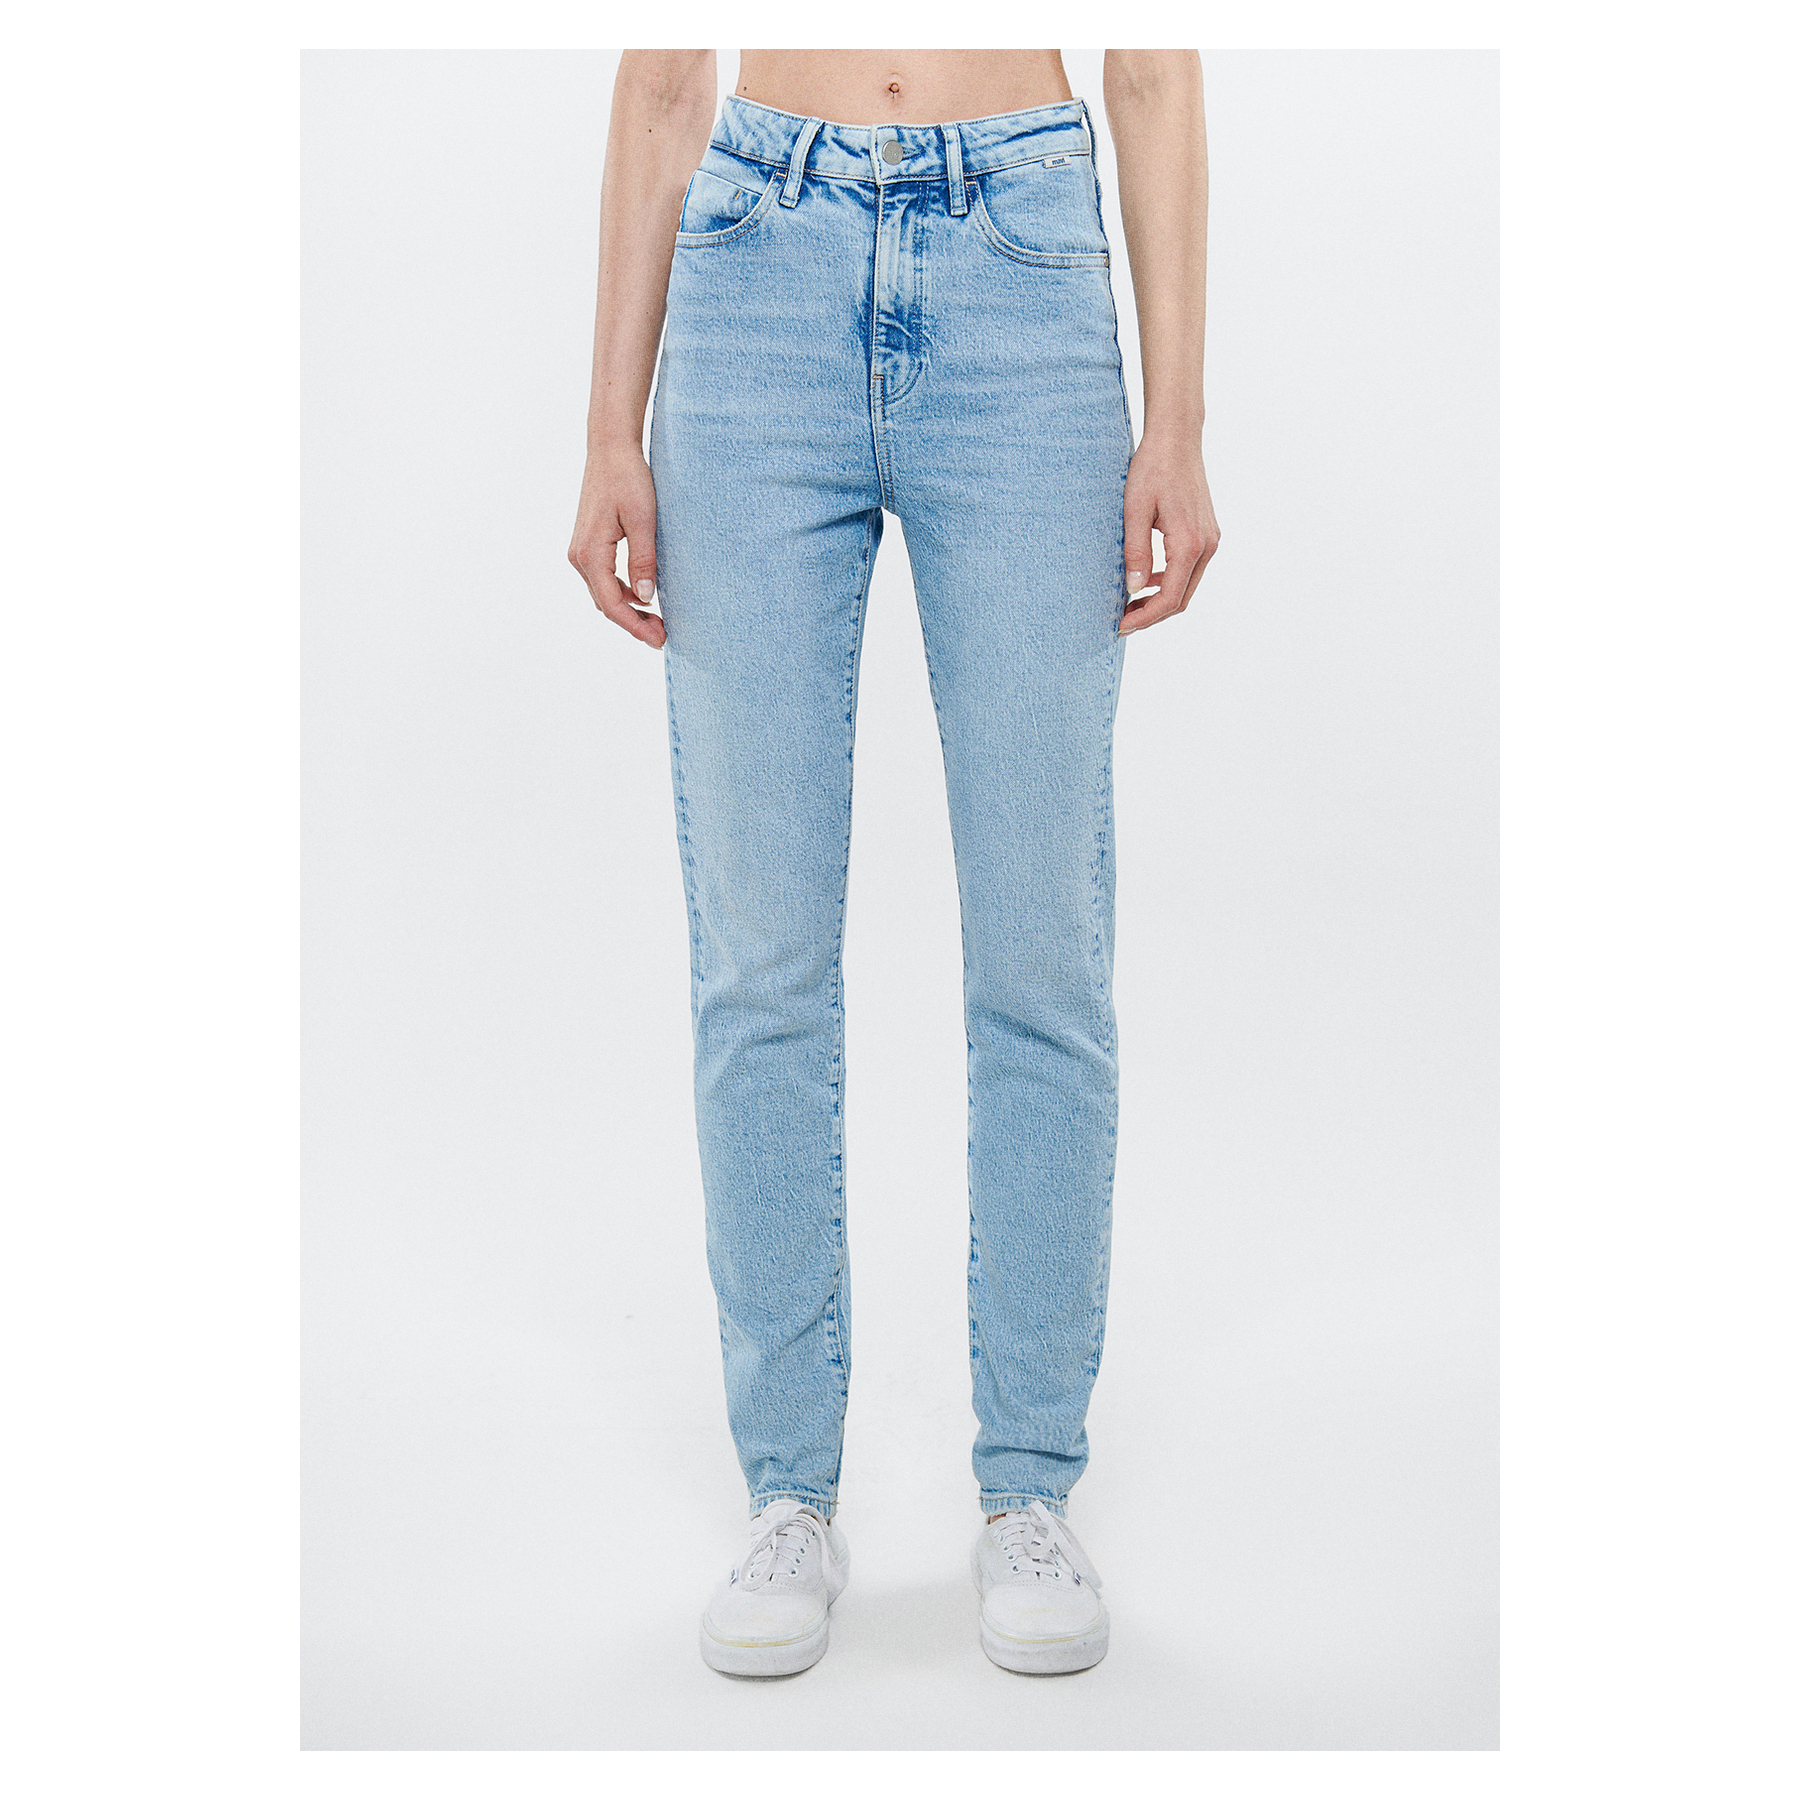 Mavi Jeans Star MID Kadın Mavi Kot Pantolon (101077-83748)